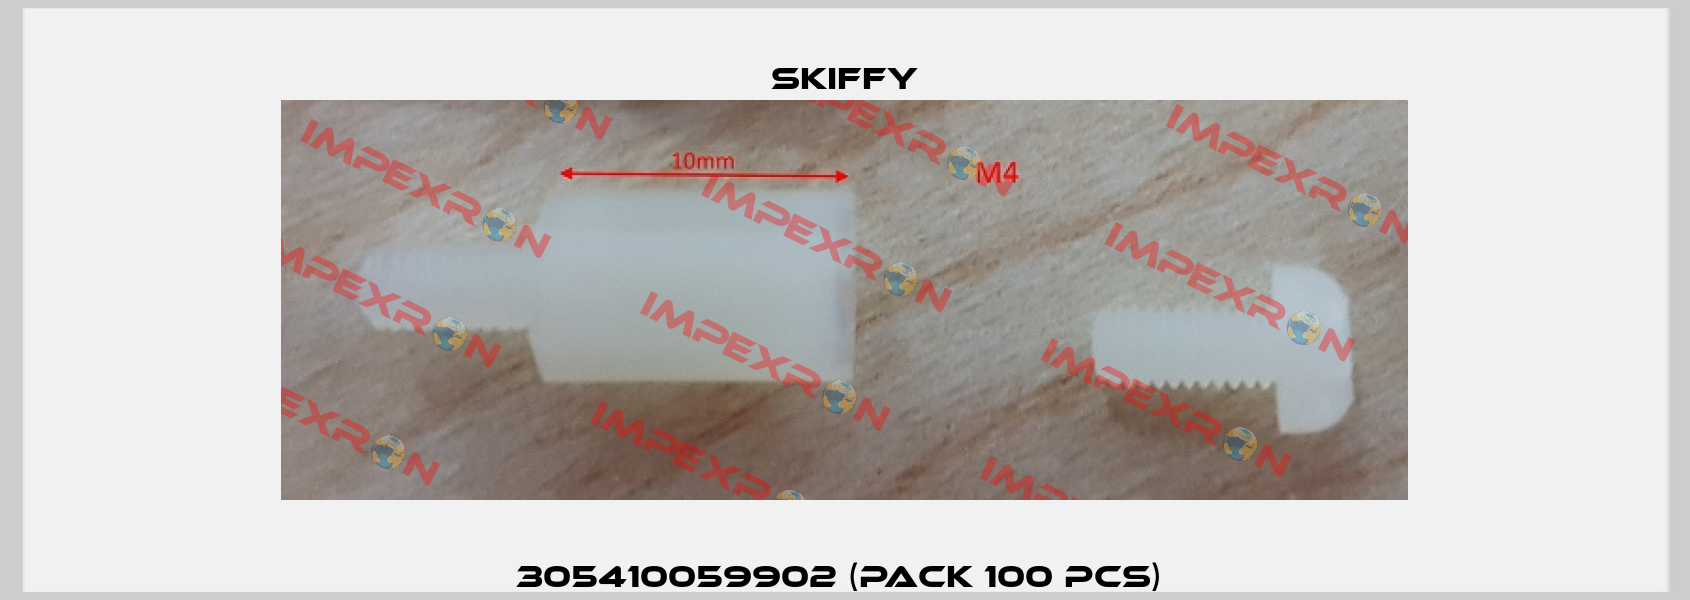 305410059902 (pack 100 pcs)  Skiffy